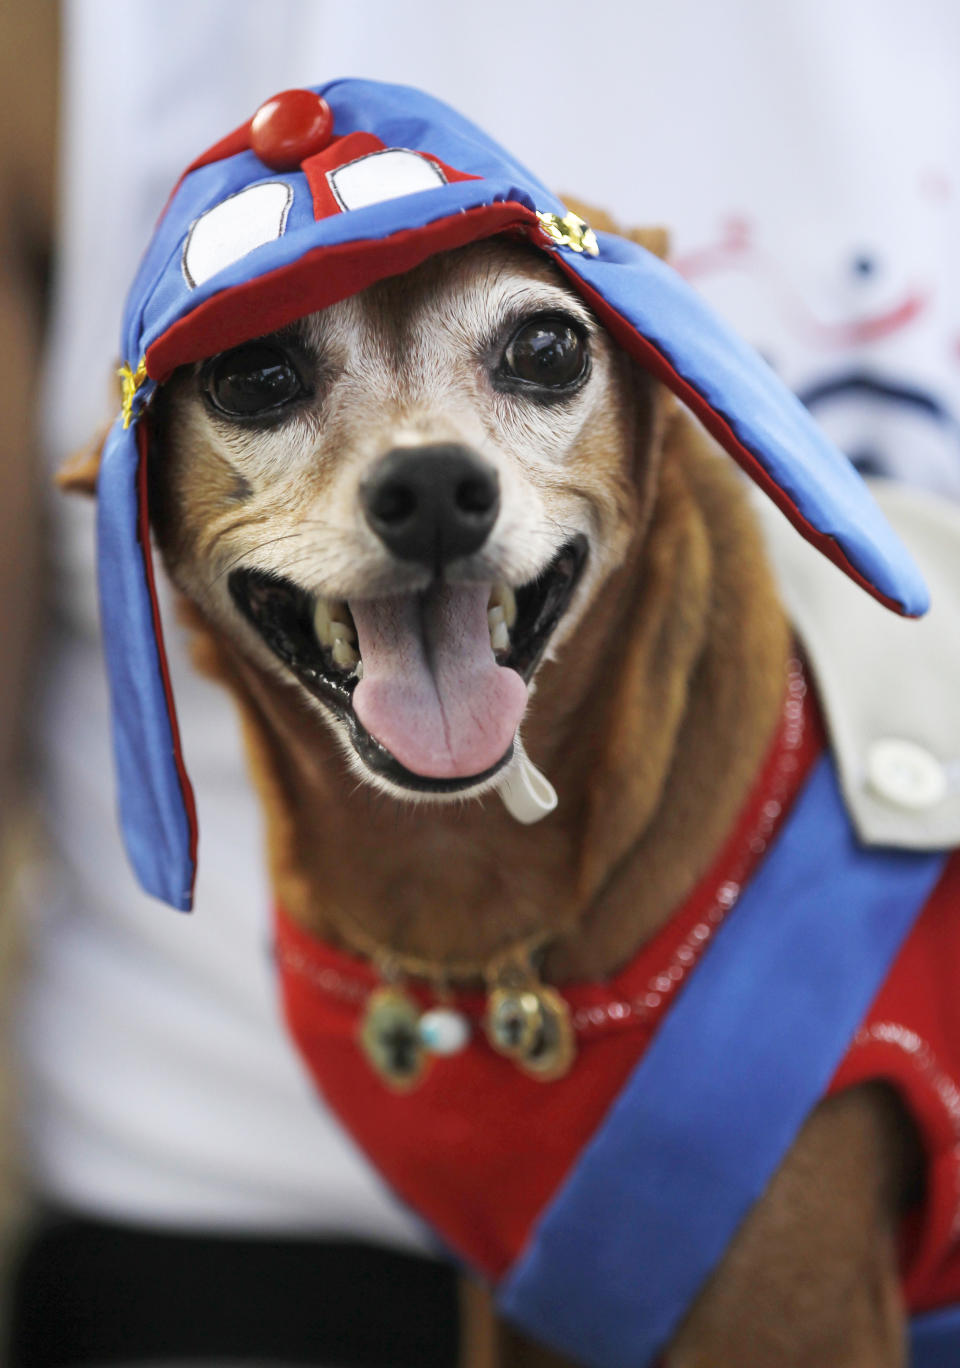 A disguised dog is seen during the "Blocao" dog carnival parade in Rio de Janeiro, Brazil, Sunday, Feb. 12, 2012. (AP Photo/Silvia Izquierdo)